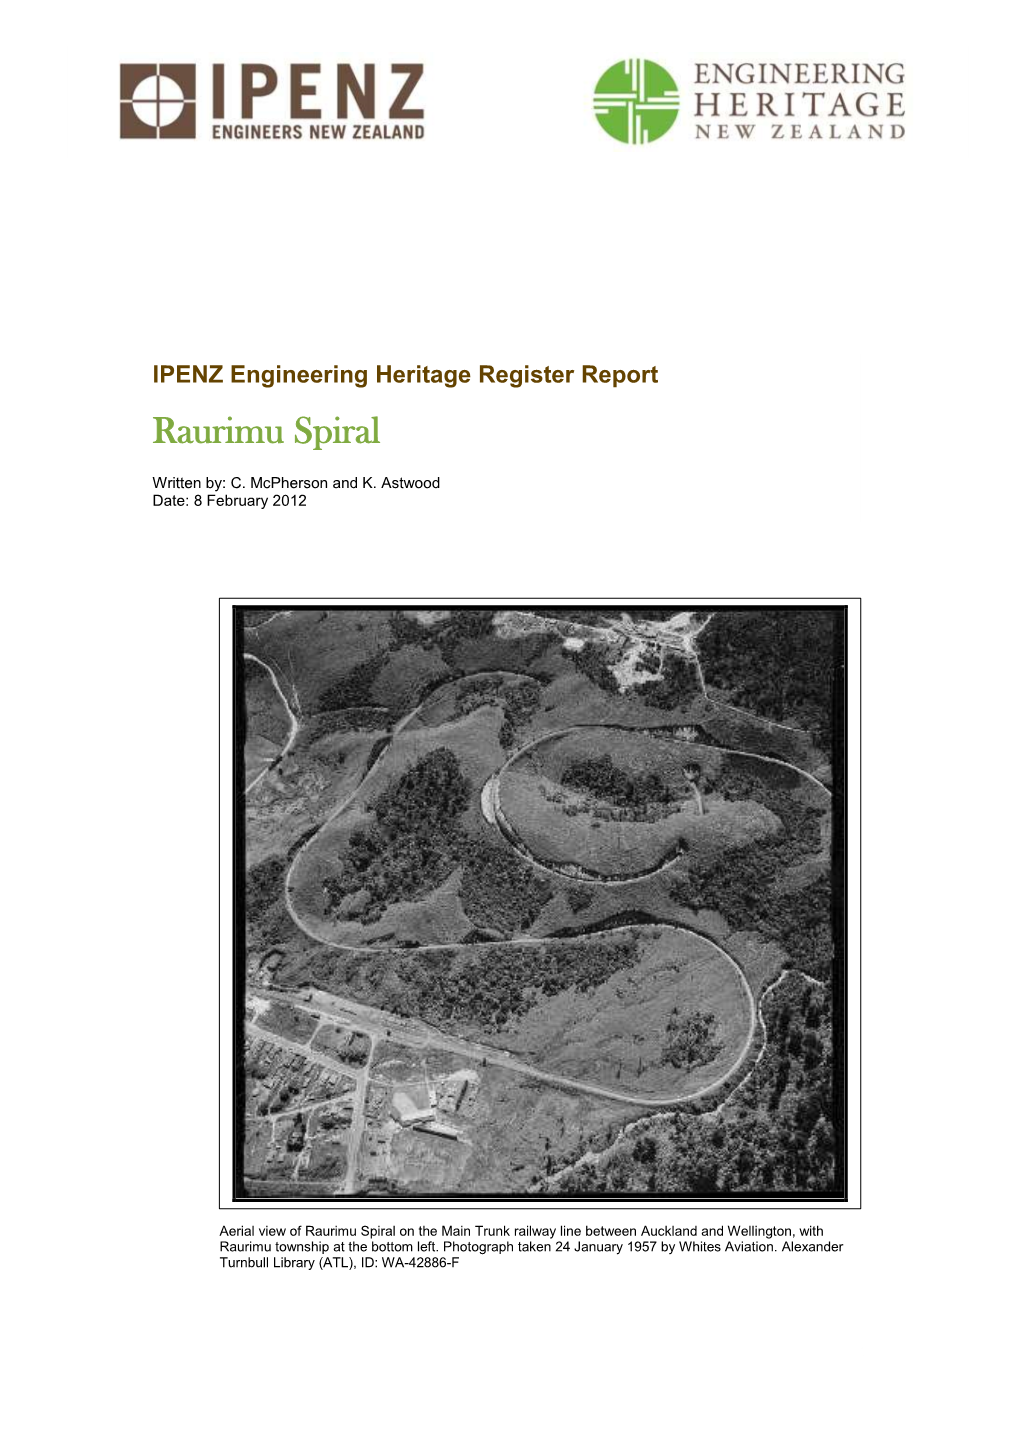 Raurimu Spiral Heritage Report